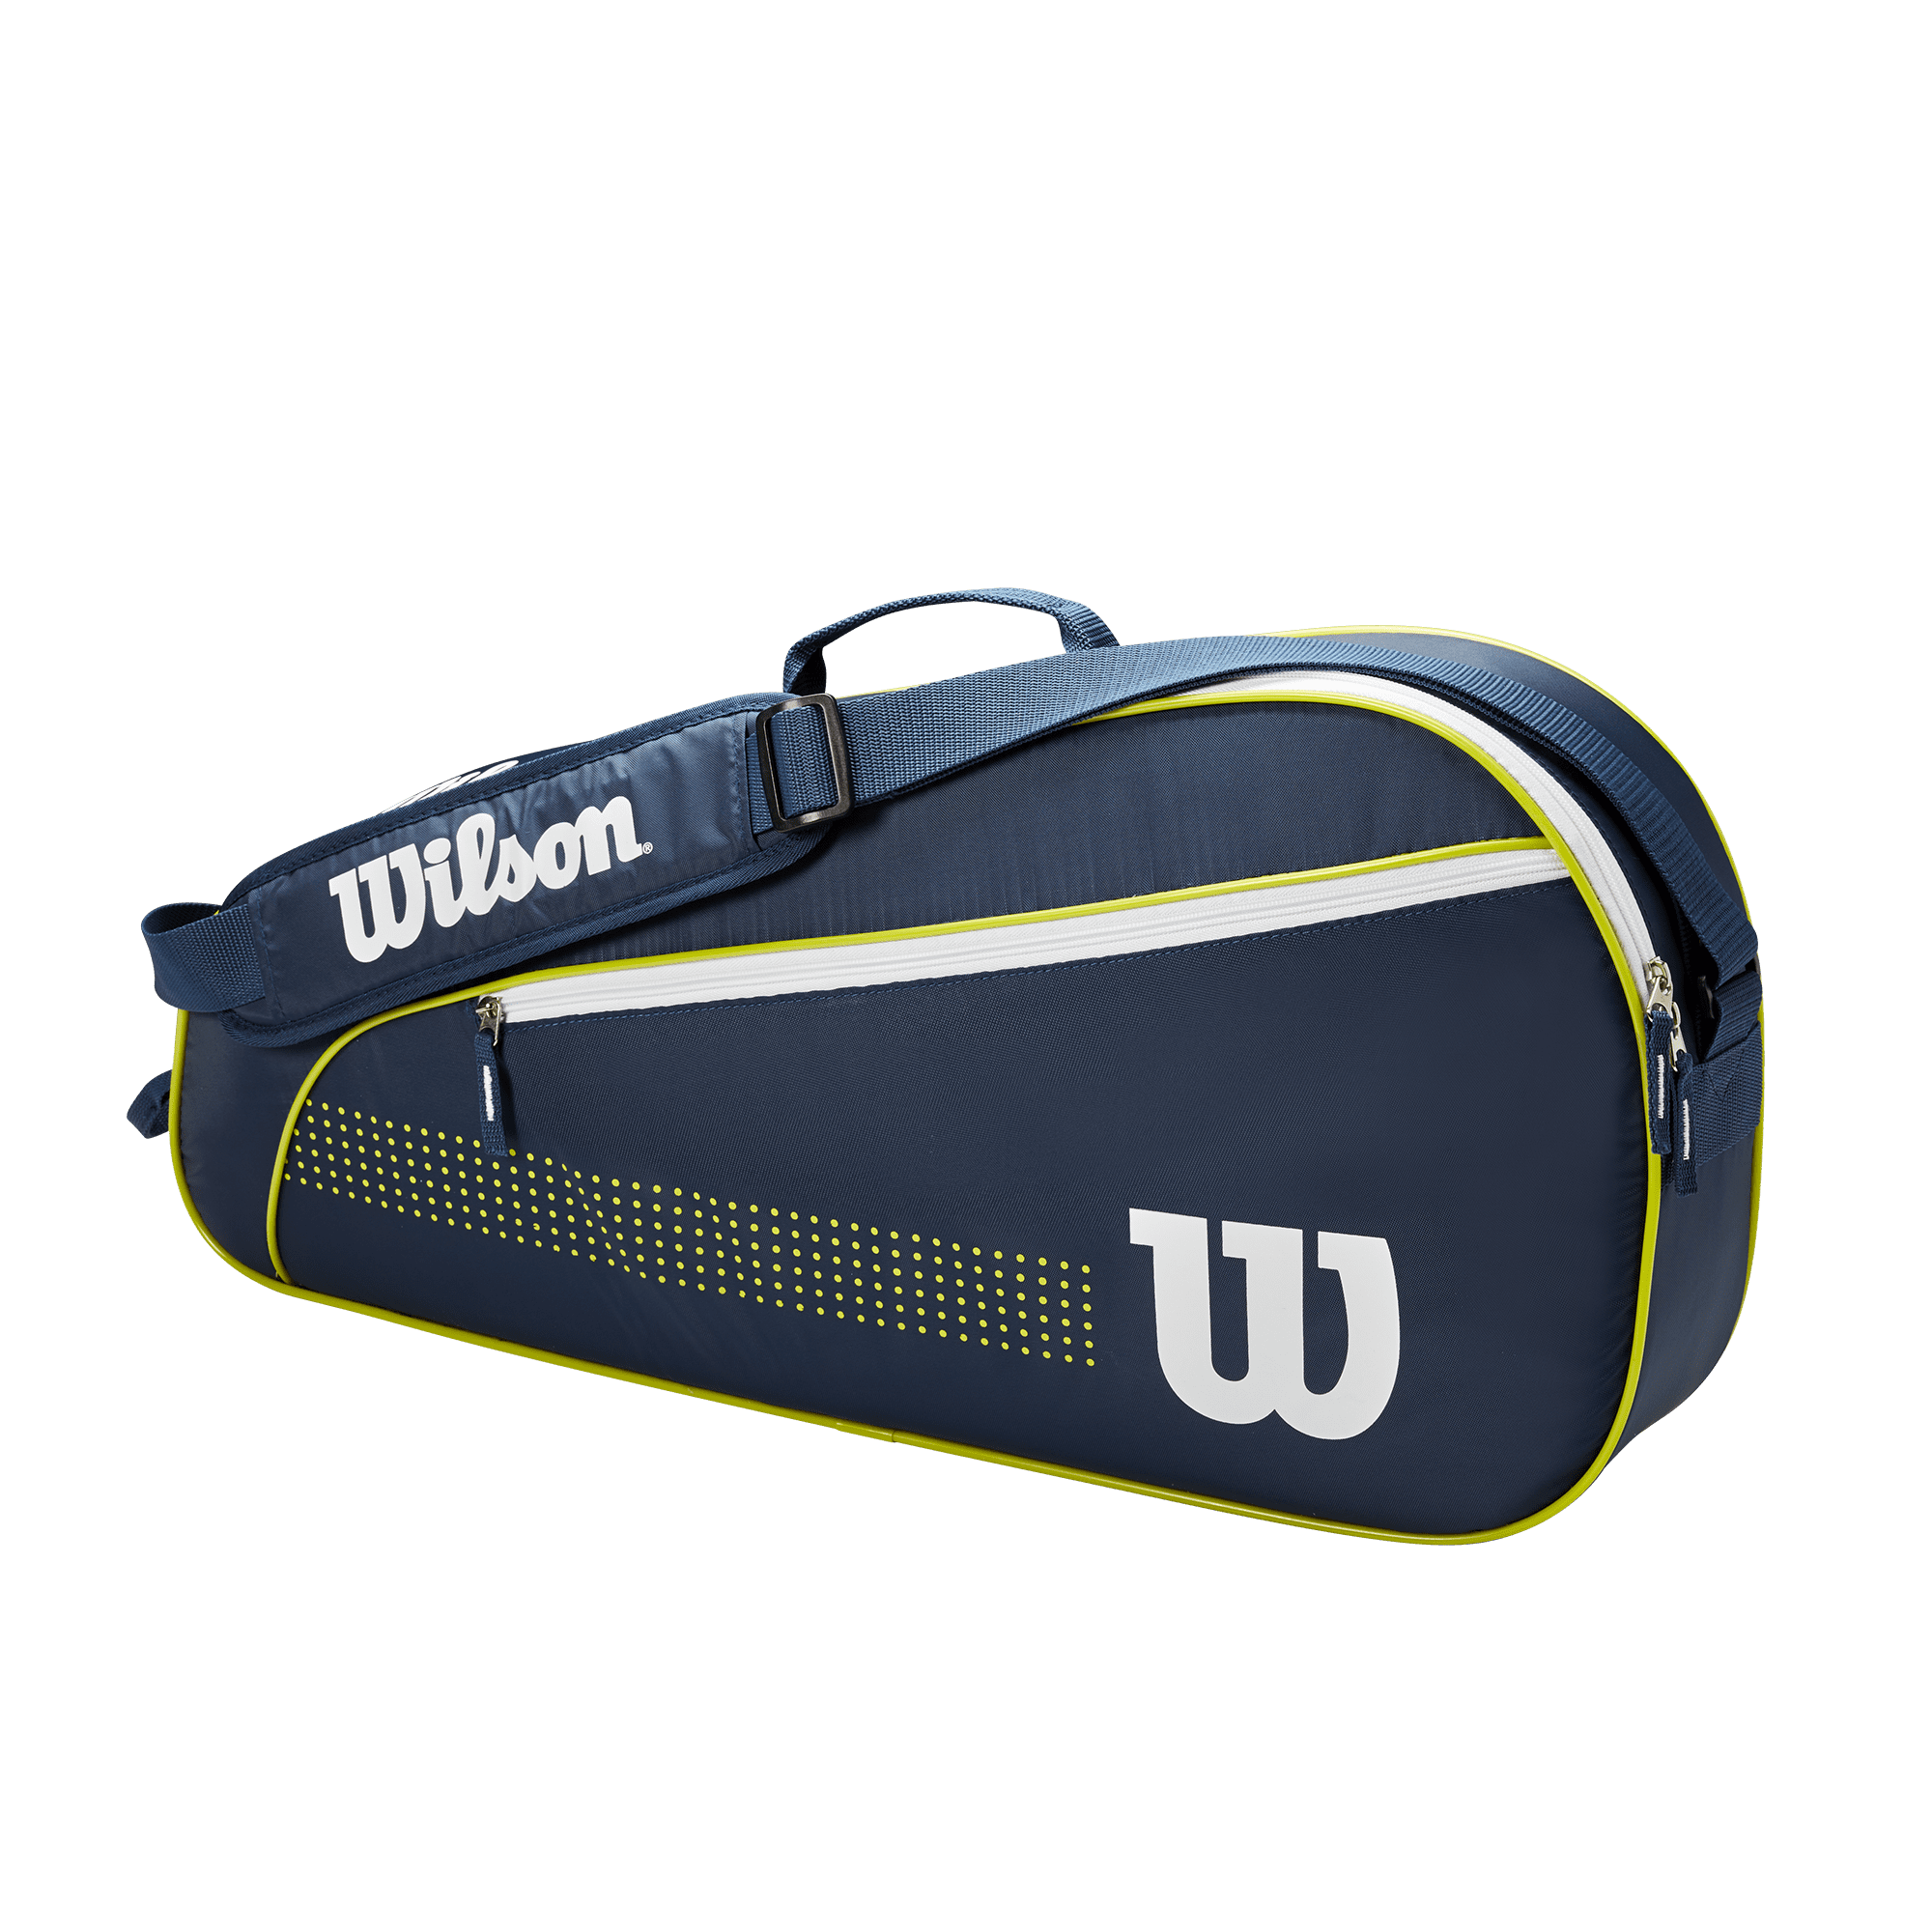 Wilson US Open Junior Tennis Racquet Bundled with an Advantage Tennis Bag Perfect for Beginner Players Age 3-10 